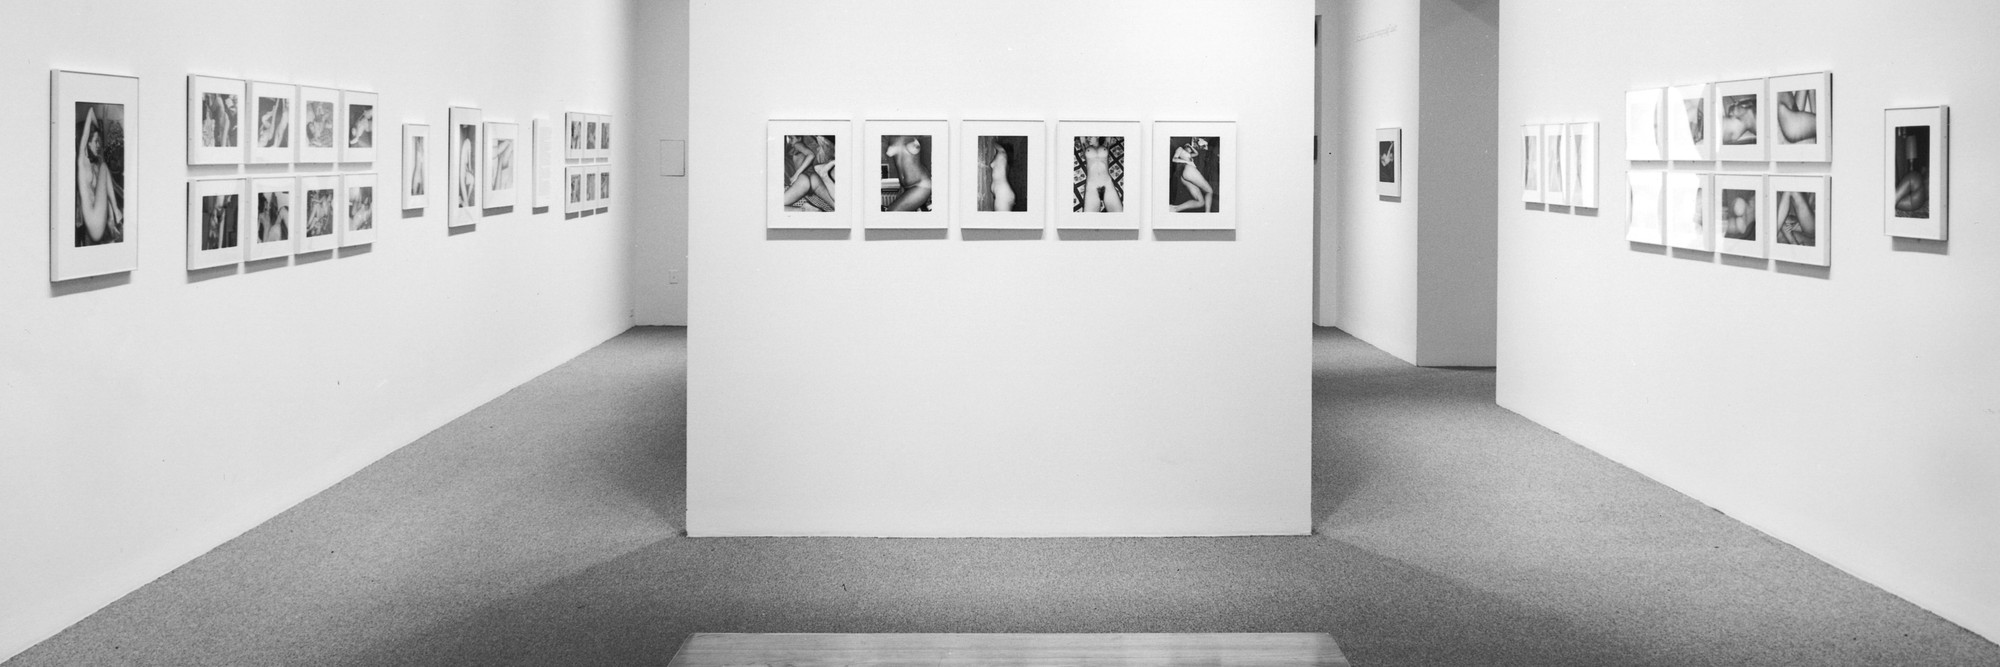 Installation view of Lee Friedlander: Nudes at The Museum of Modern Art, New York. Photo: Mali Olatunji